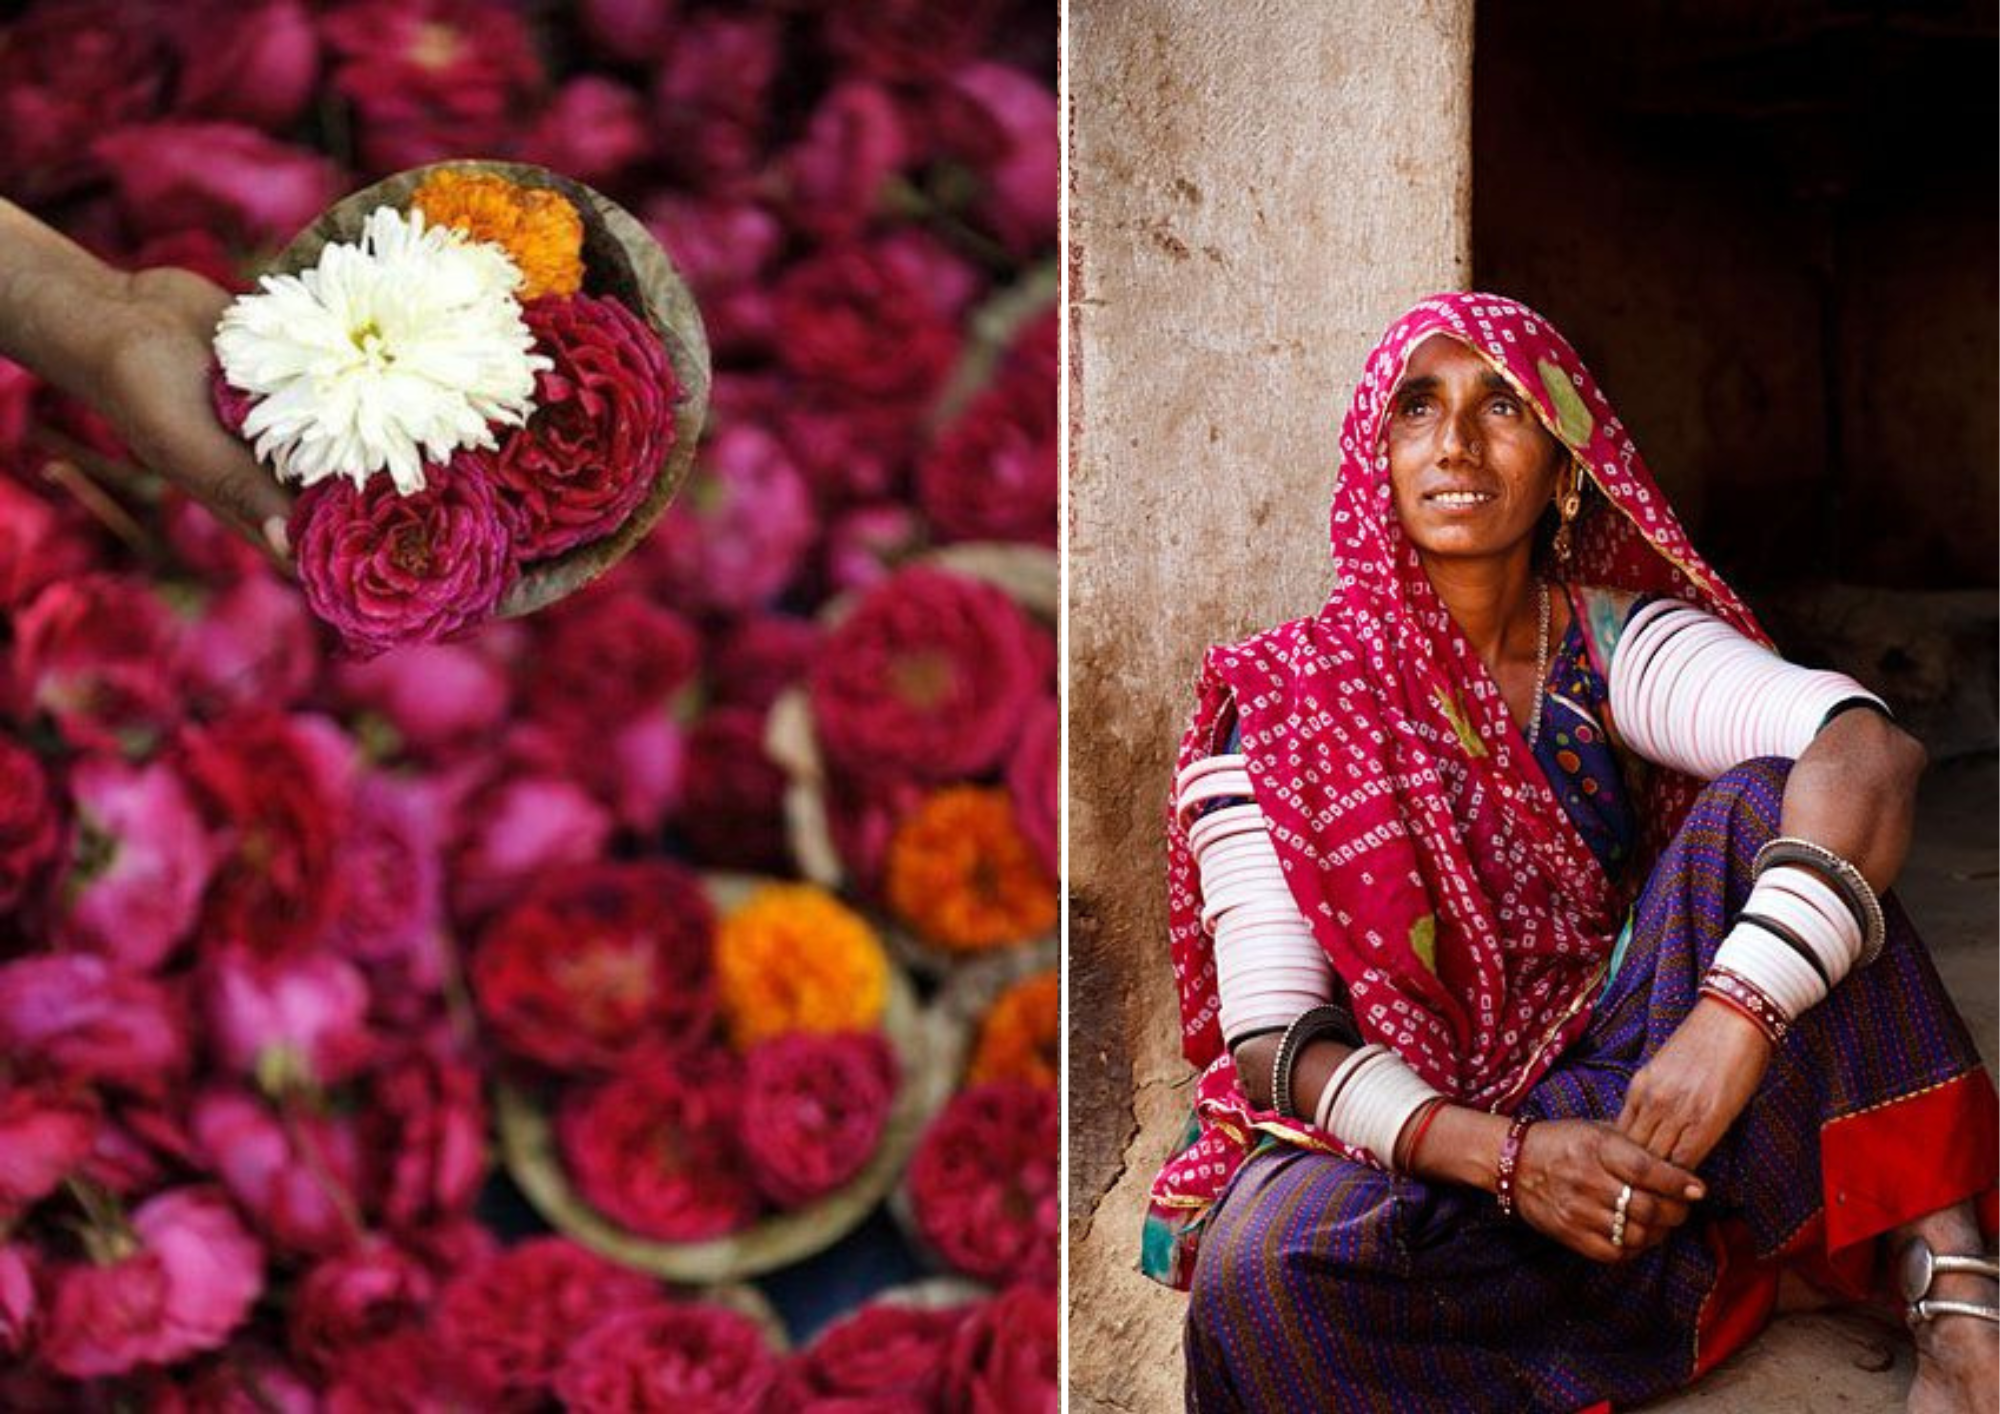 Flower market in India, Indian woman in sari